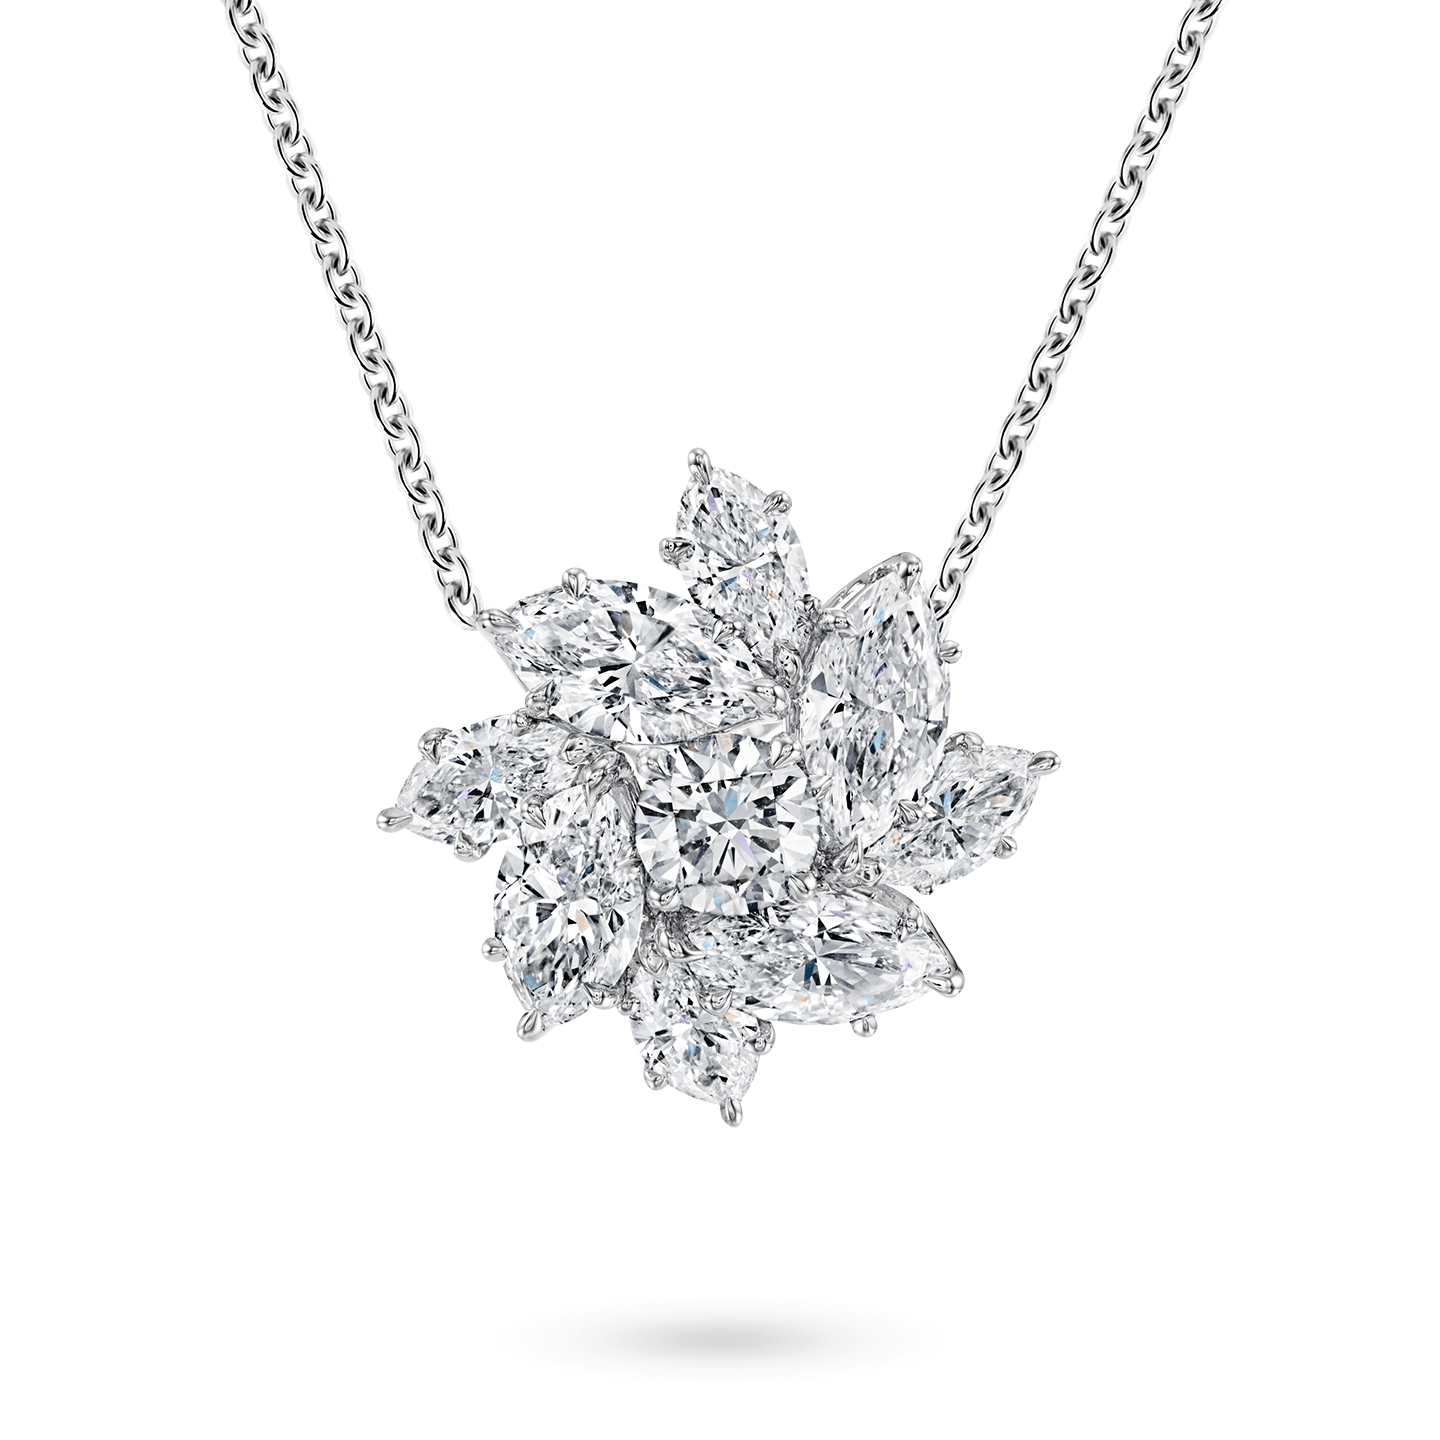 Pirouette Diamond Pendant, Product Image 1